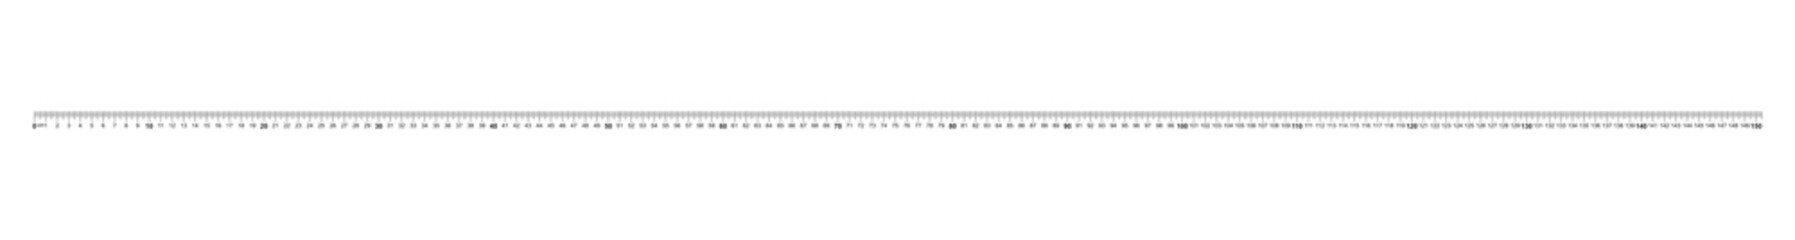 Ruler 150 centimeter. Precise measuring tool. Calibration grid.